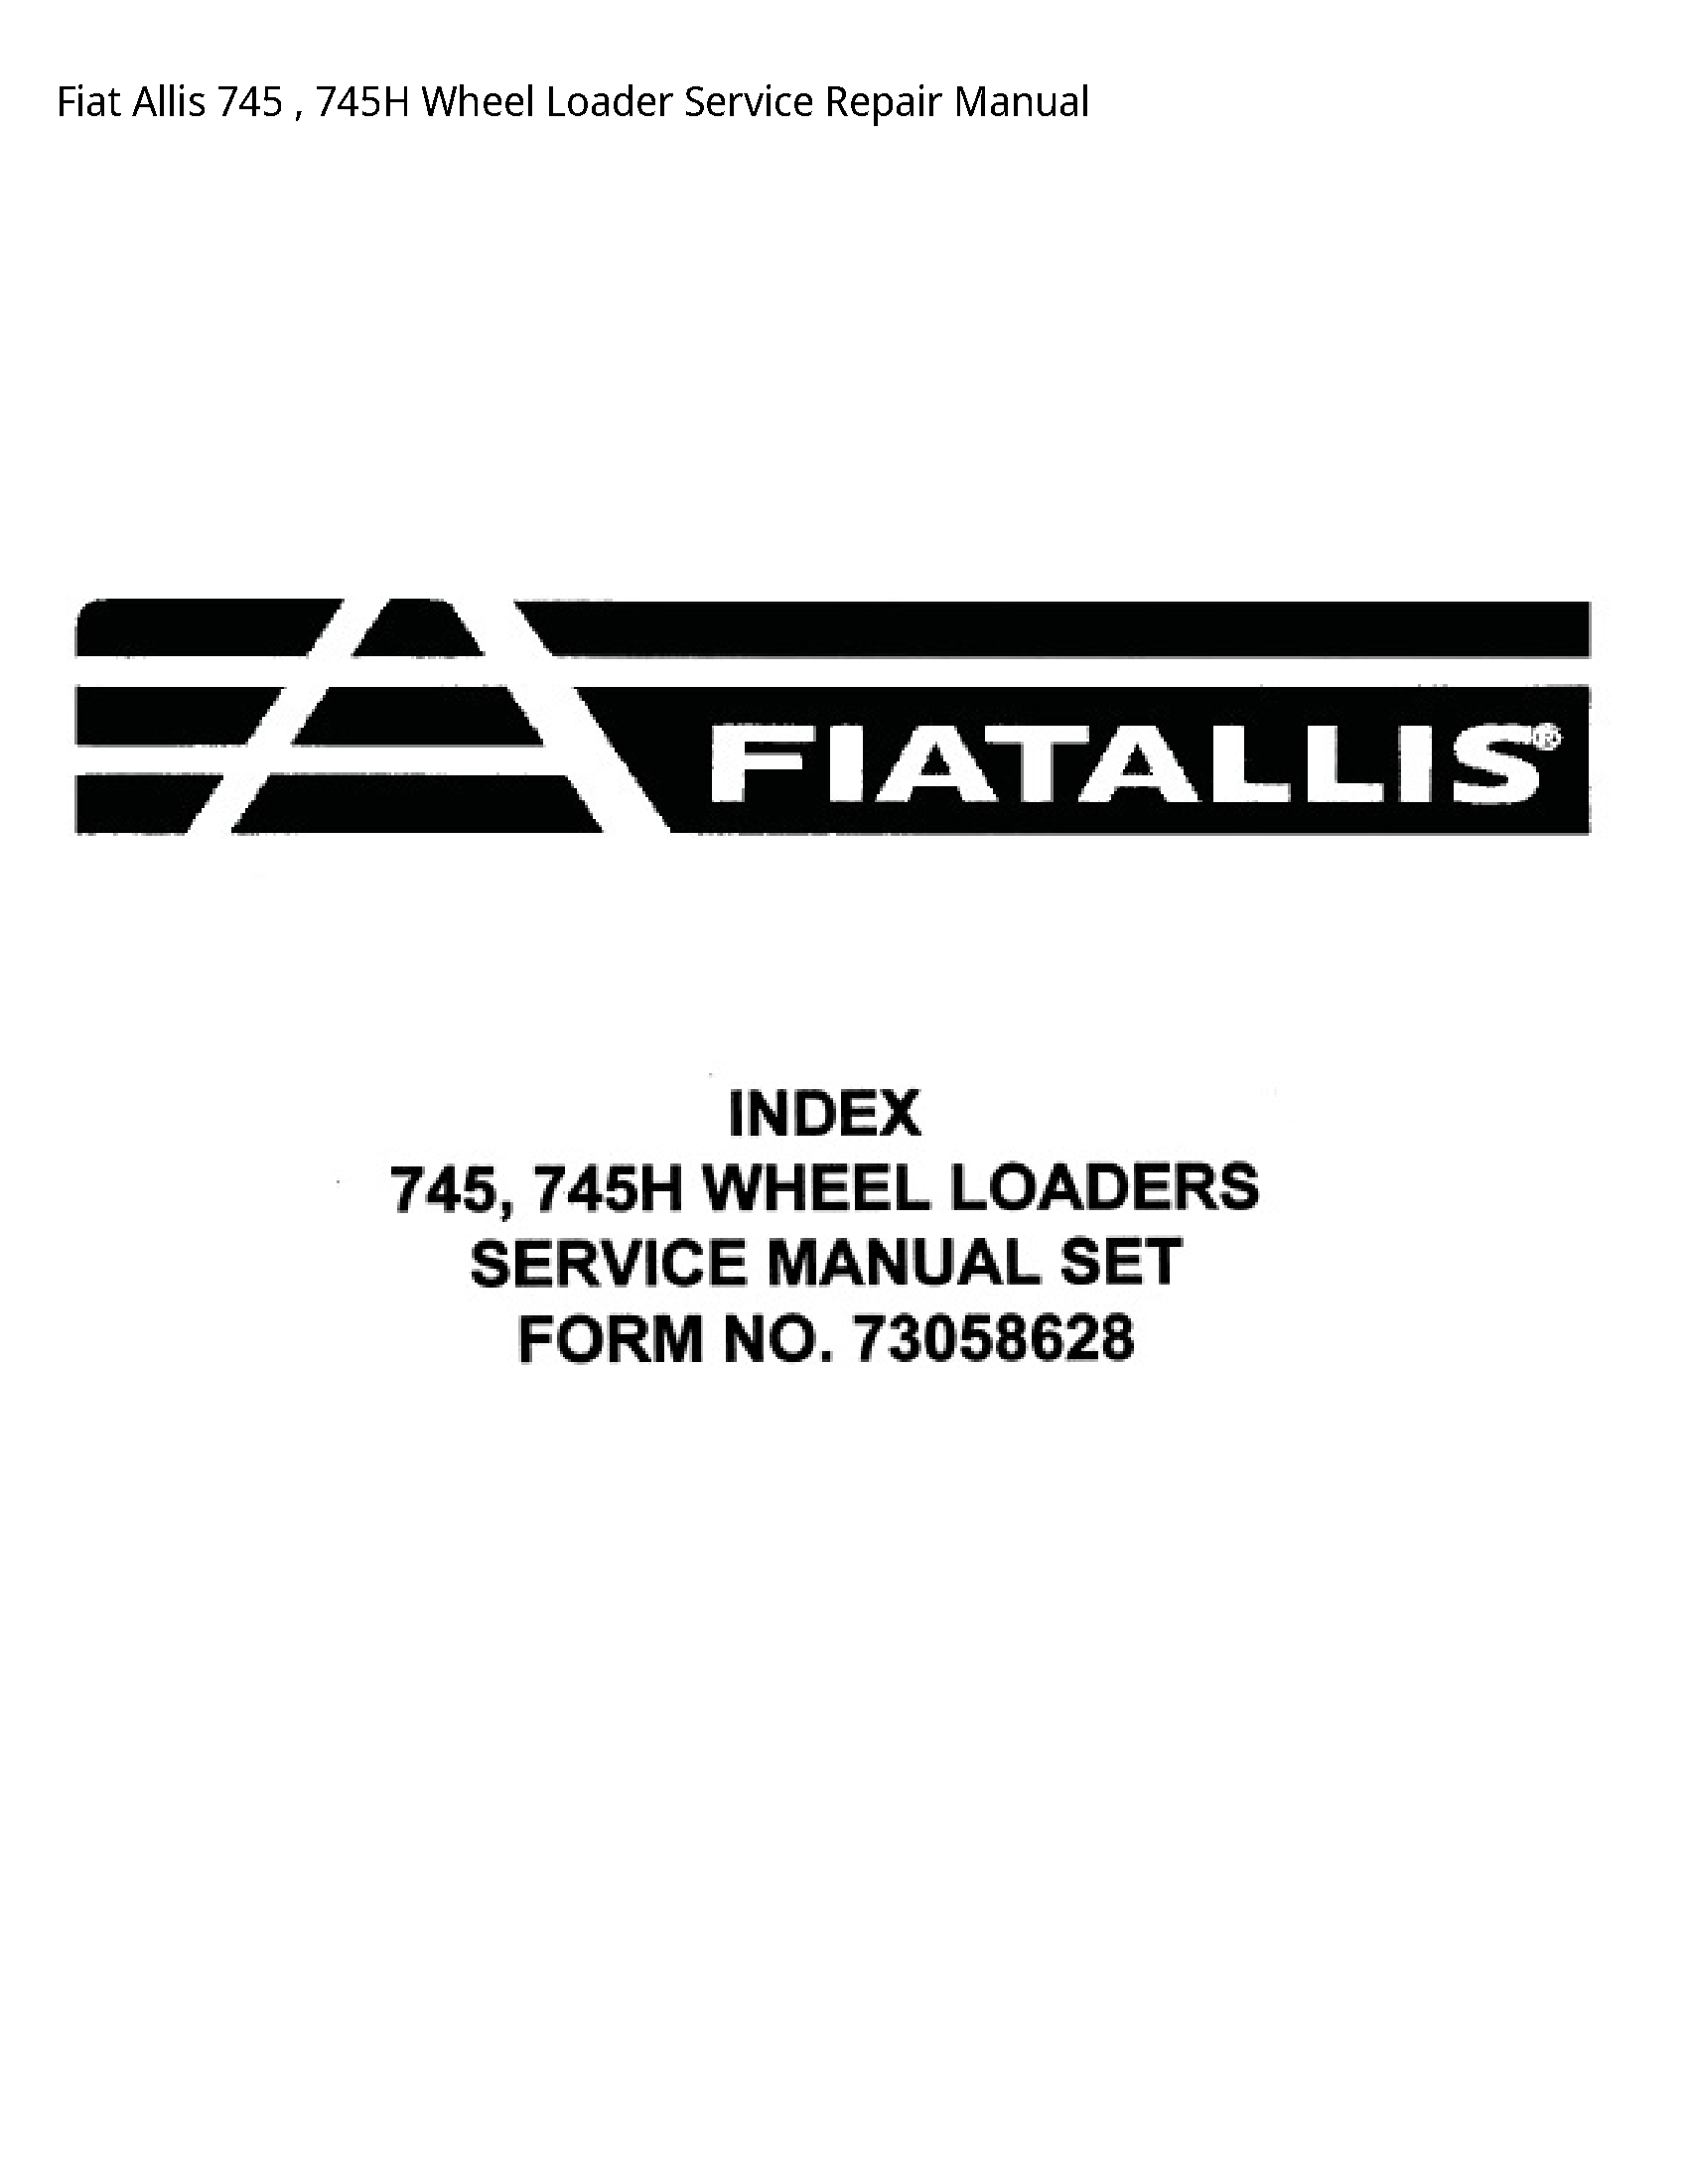 Fiat Allis 745 Wheel Loader manual